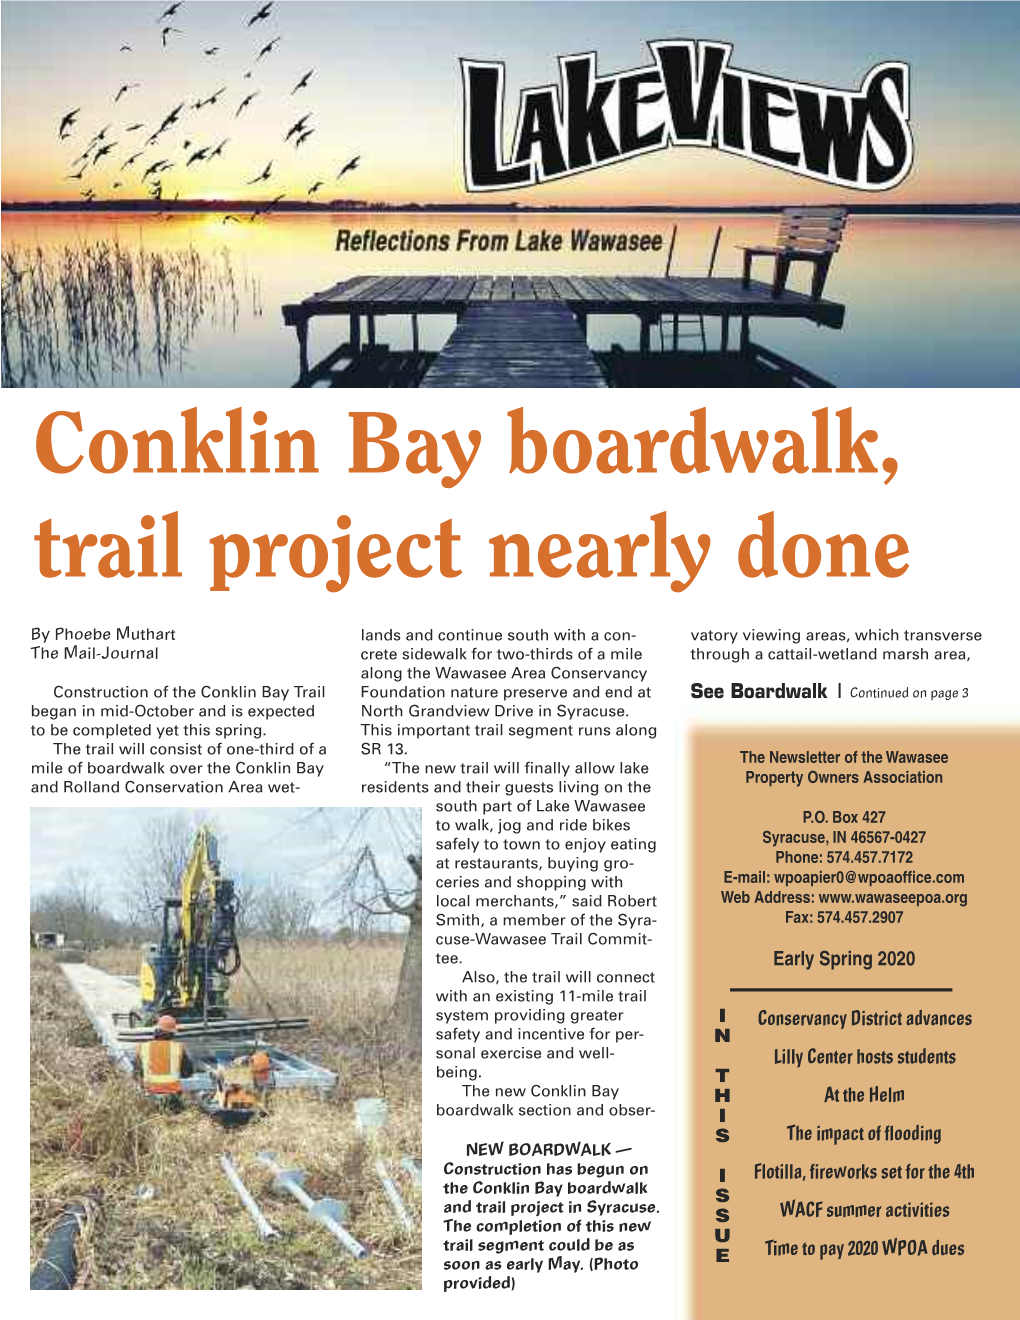 Conklin Bay Boardwalk, Trail Project Nearly Done